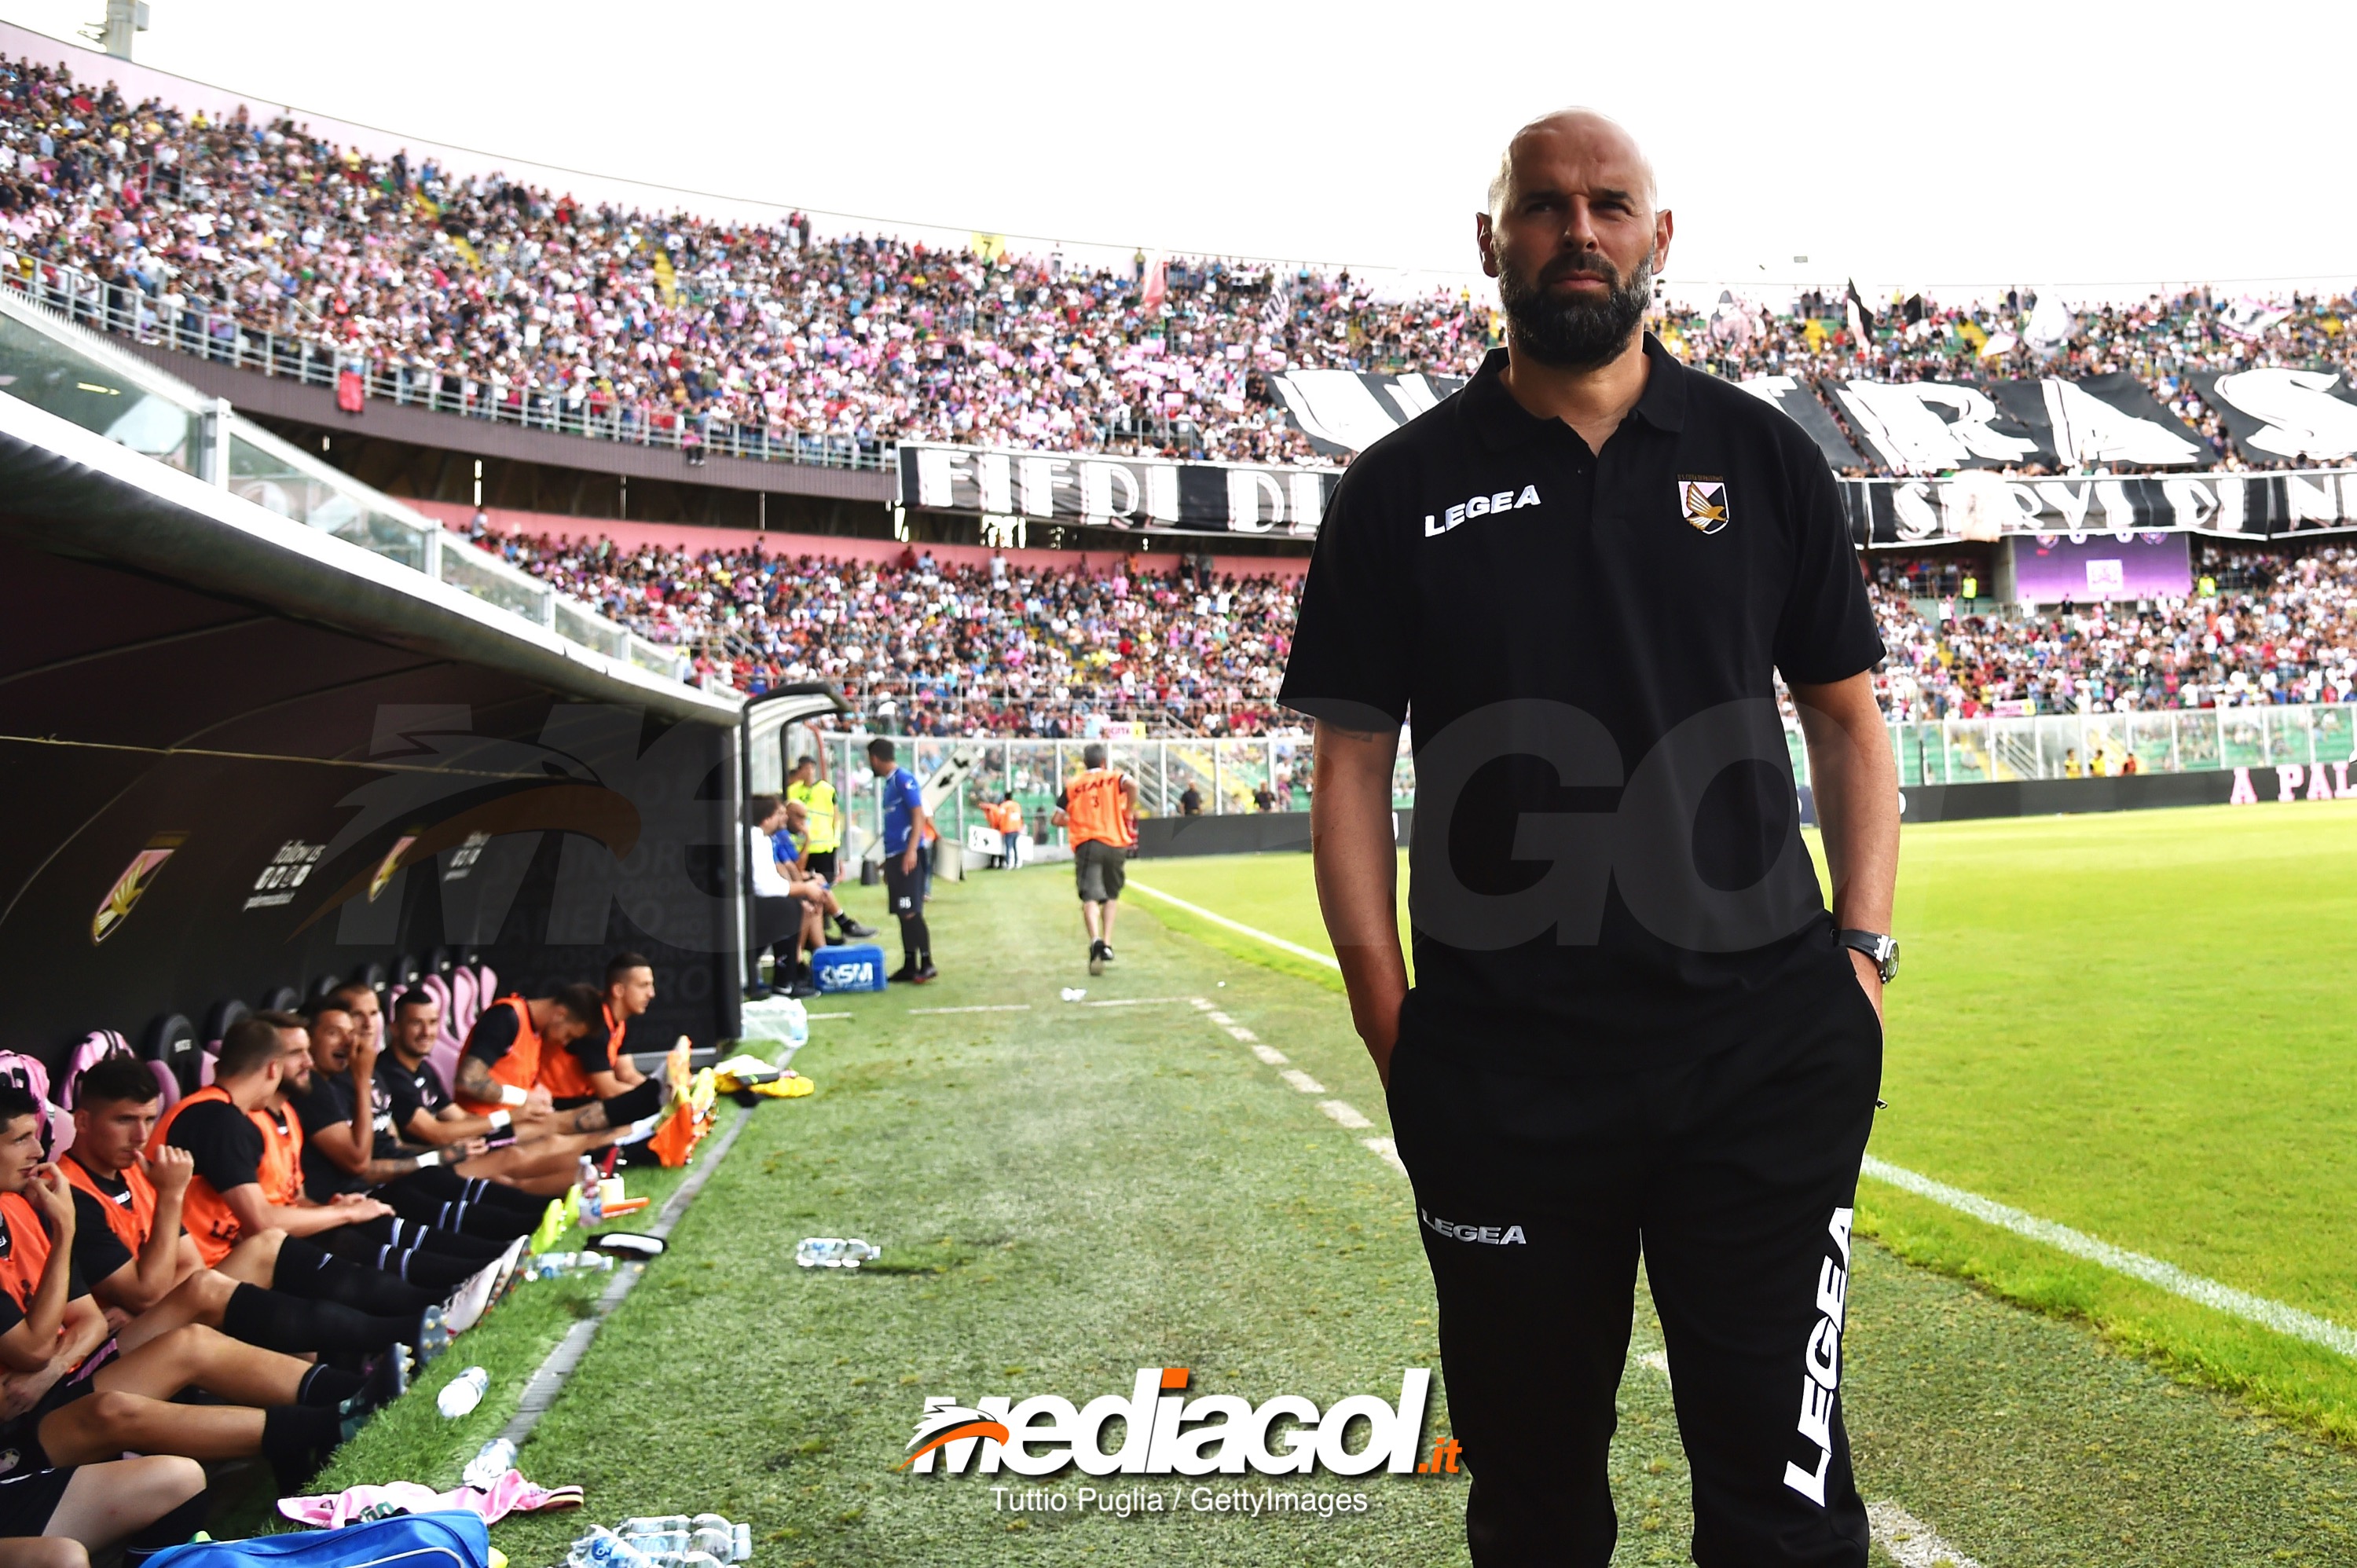 US Citta di Palermo v Venezia FC - Serie B Playoffs